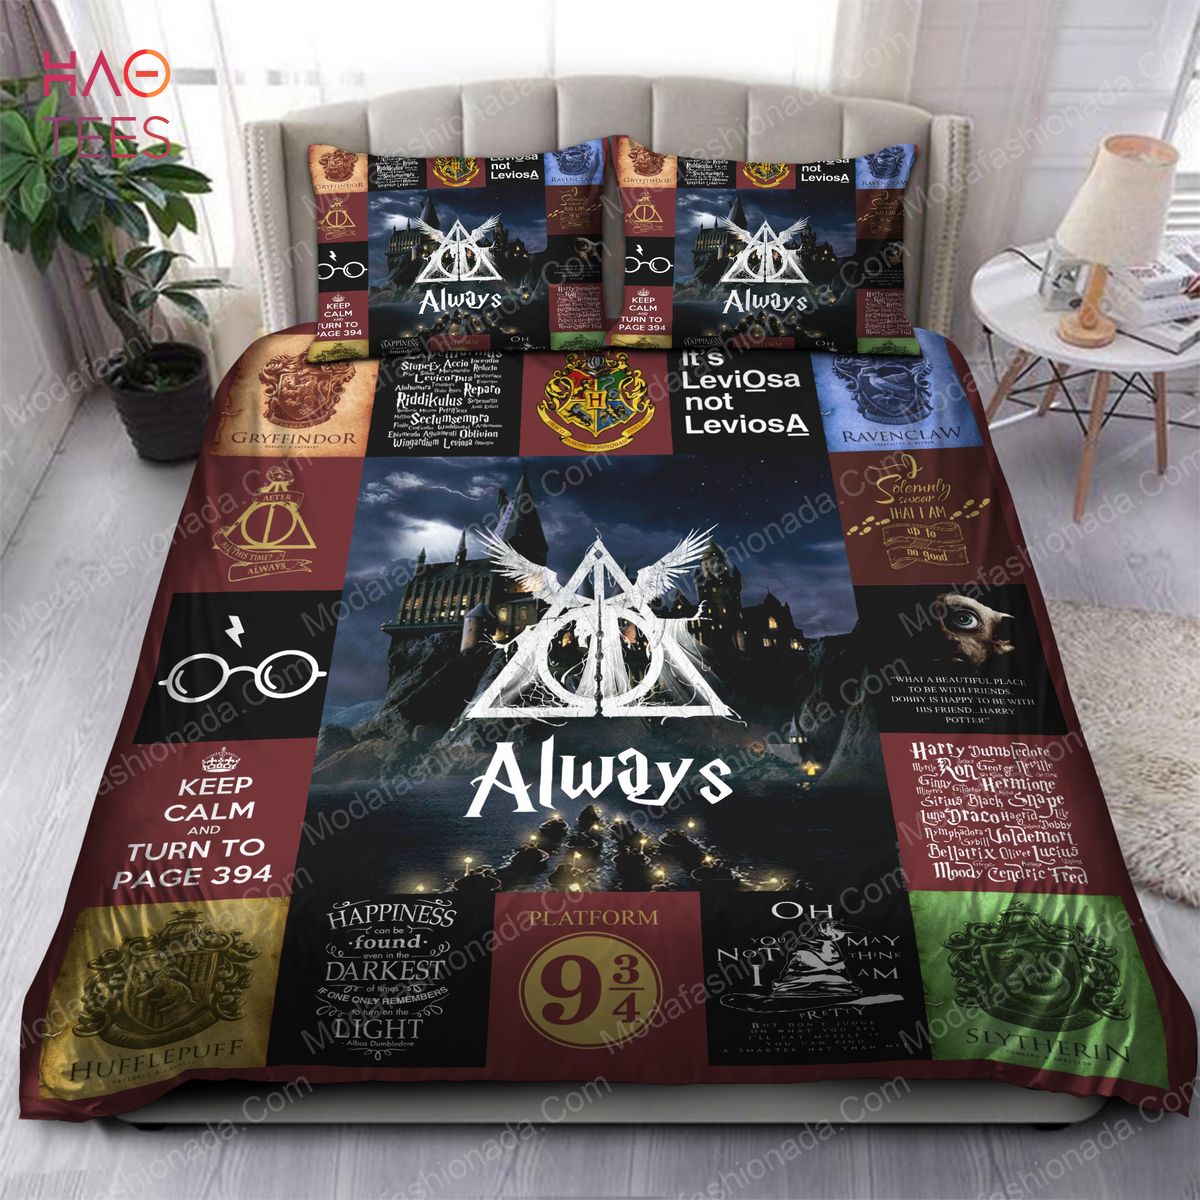 Harry Potter Bedding Set Dobby Bedding Sheet Gifts